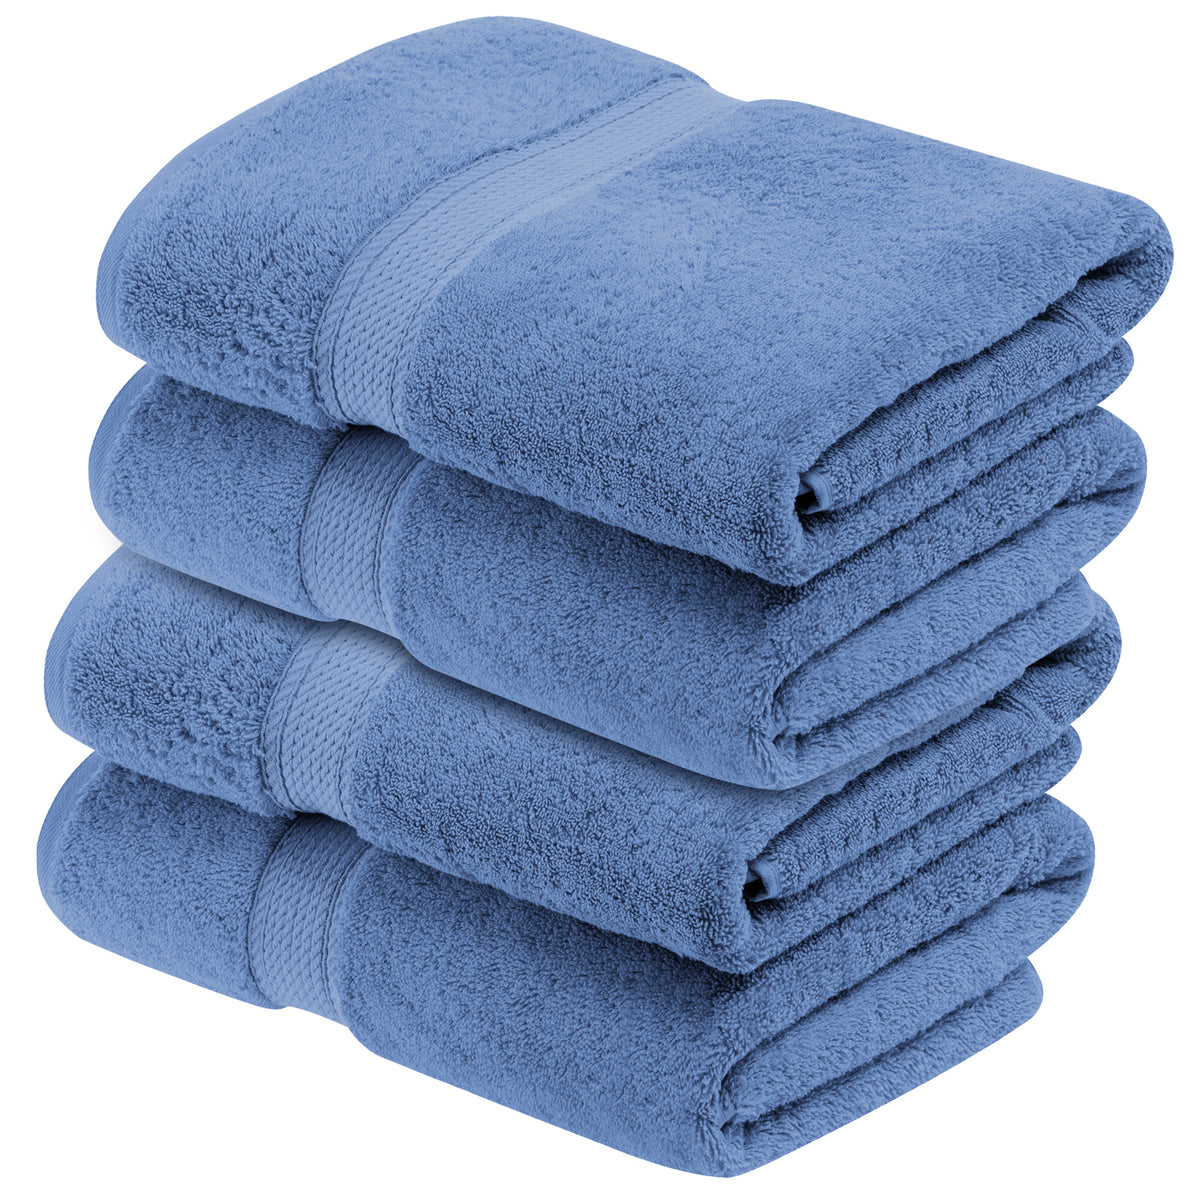 Superior Egyptian Cotton Plush Heavyweight Absorbent Luxury Soft Bath Towel (Set of 4)